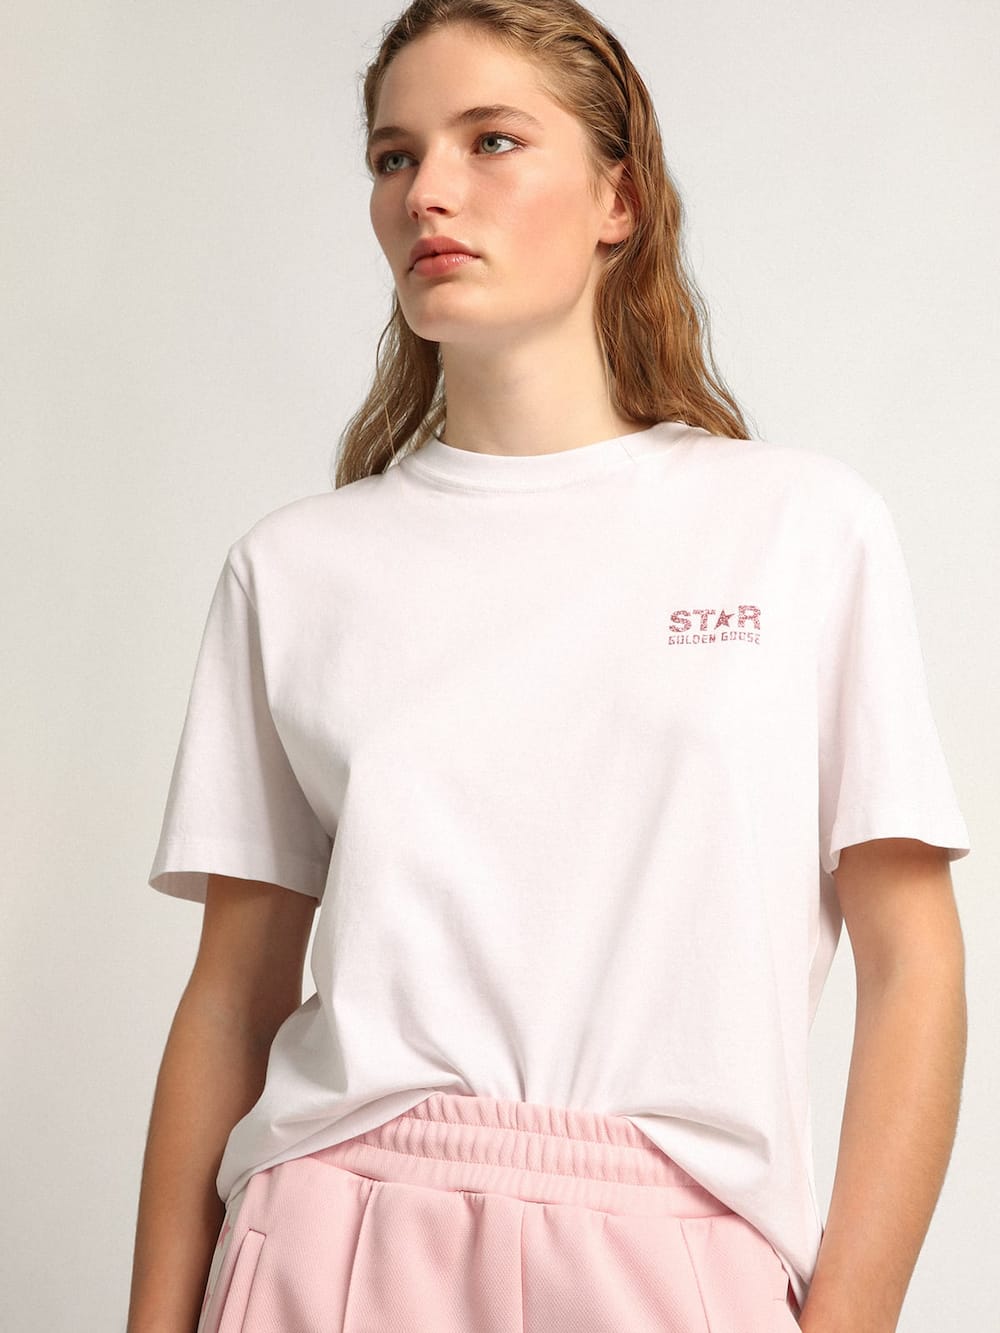 Golden Goose - T-shirt bianca da donna con logo e stella in glitter rosa  in 